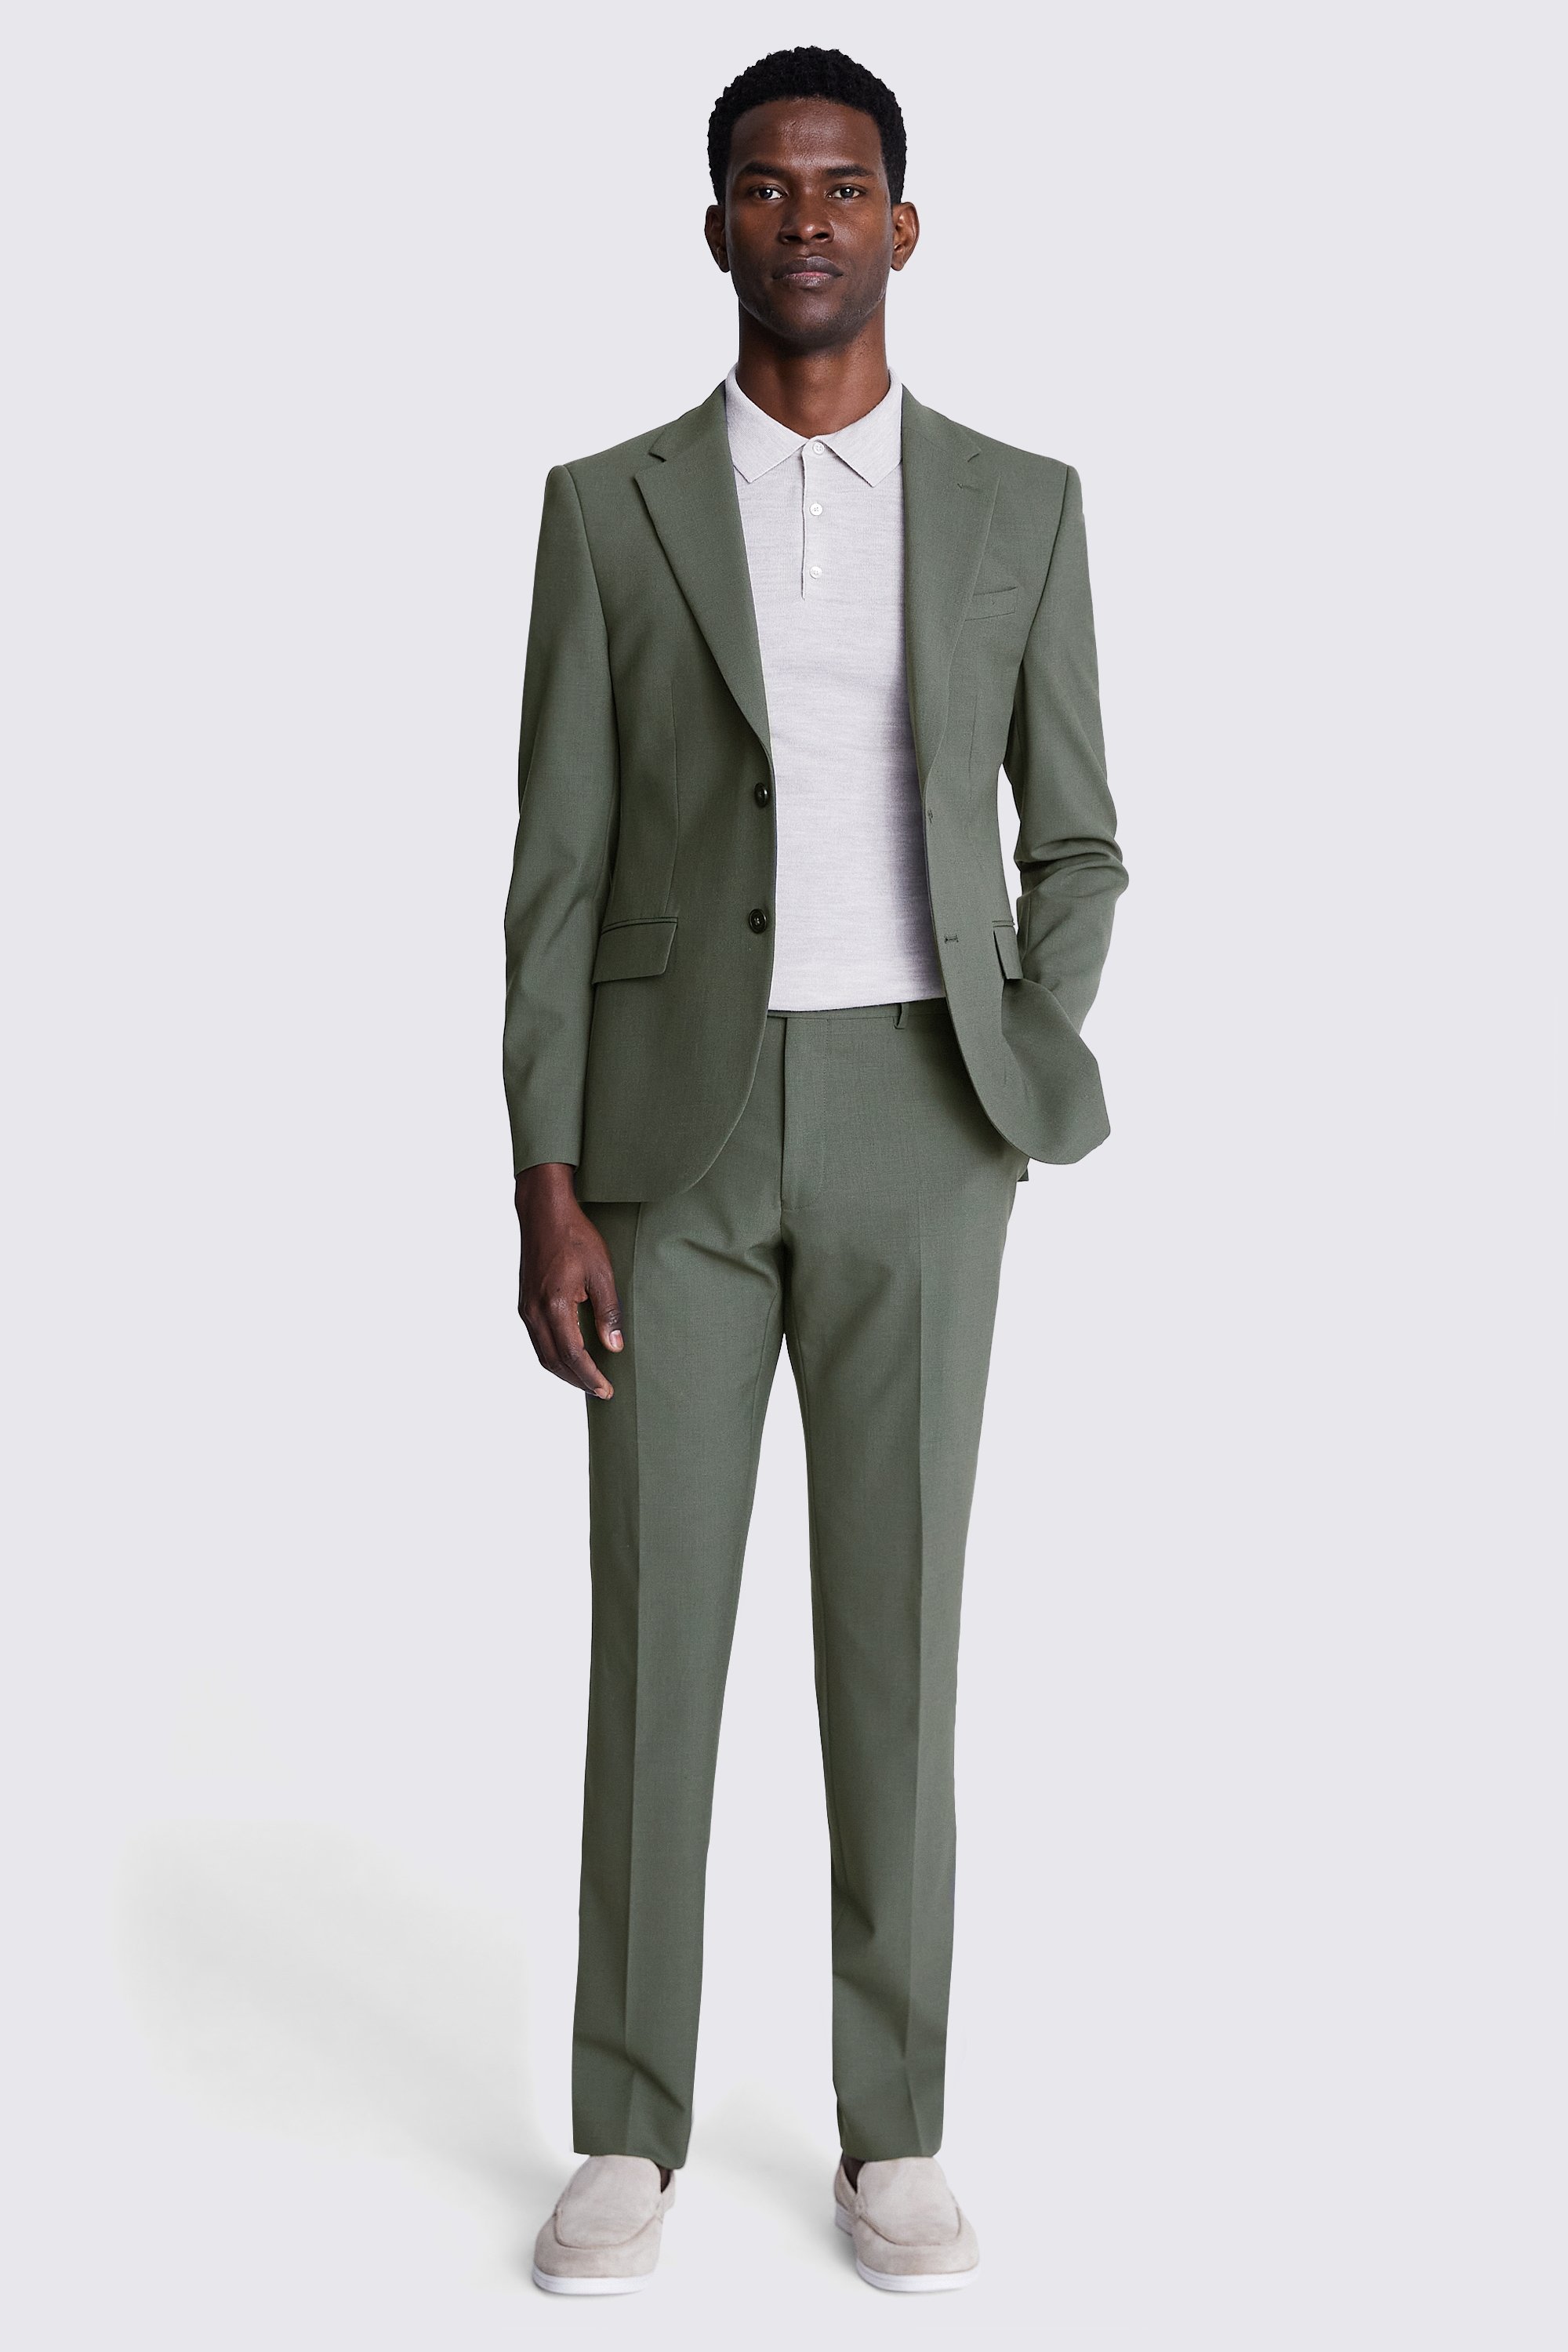 DKNY Slim Fit Sage Green Jacket | Buy Online at Moss